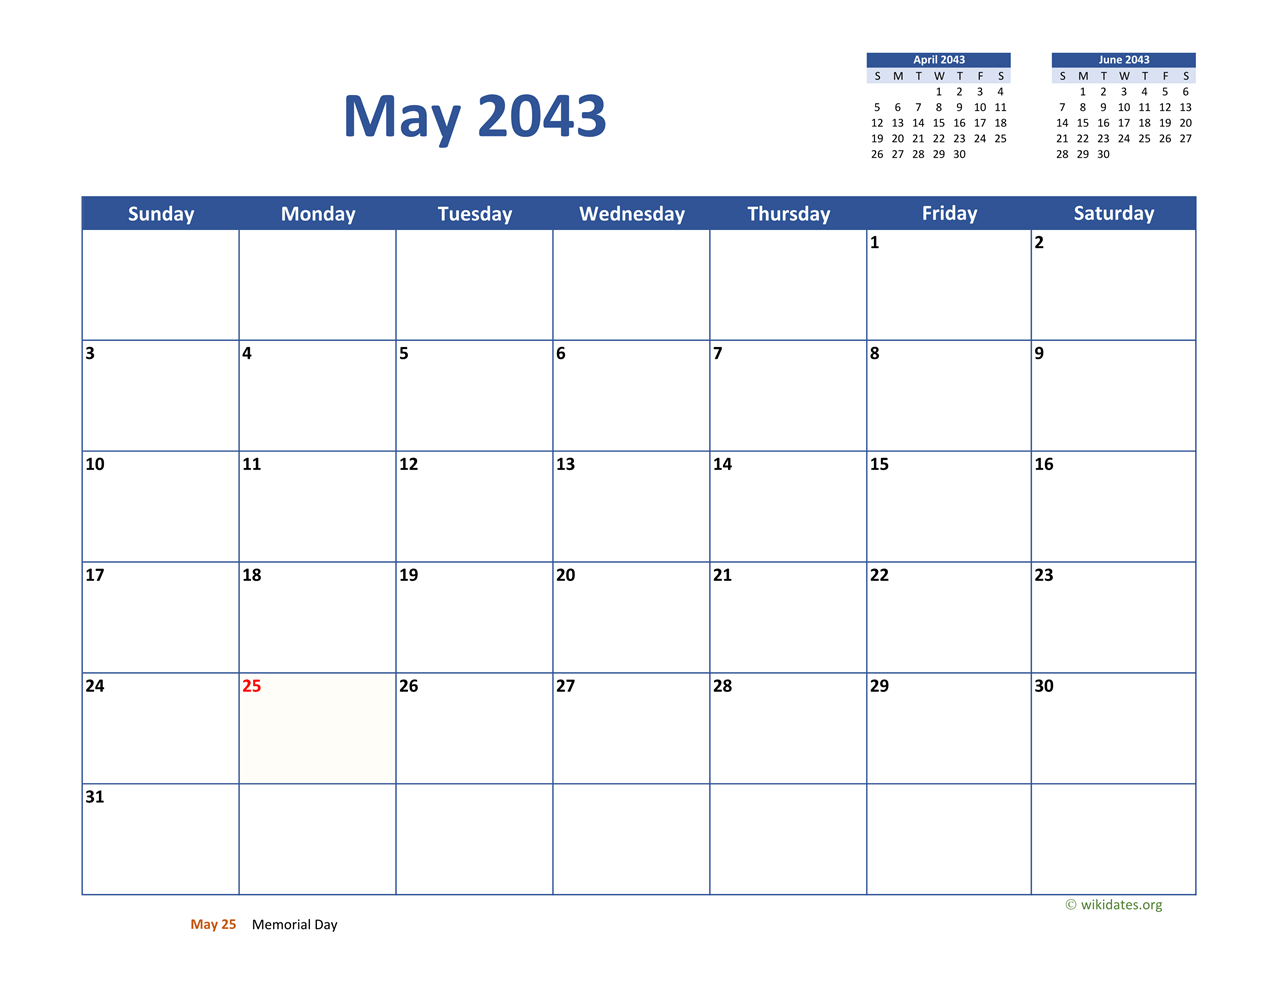 may-2043-calendar-classic-wikidates